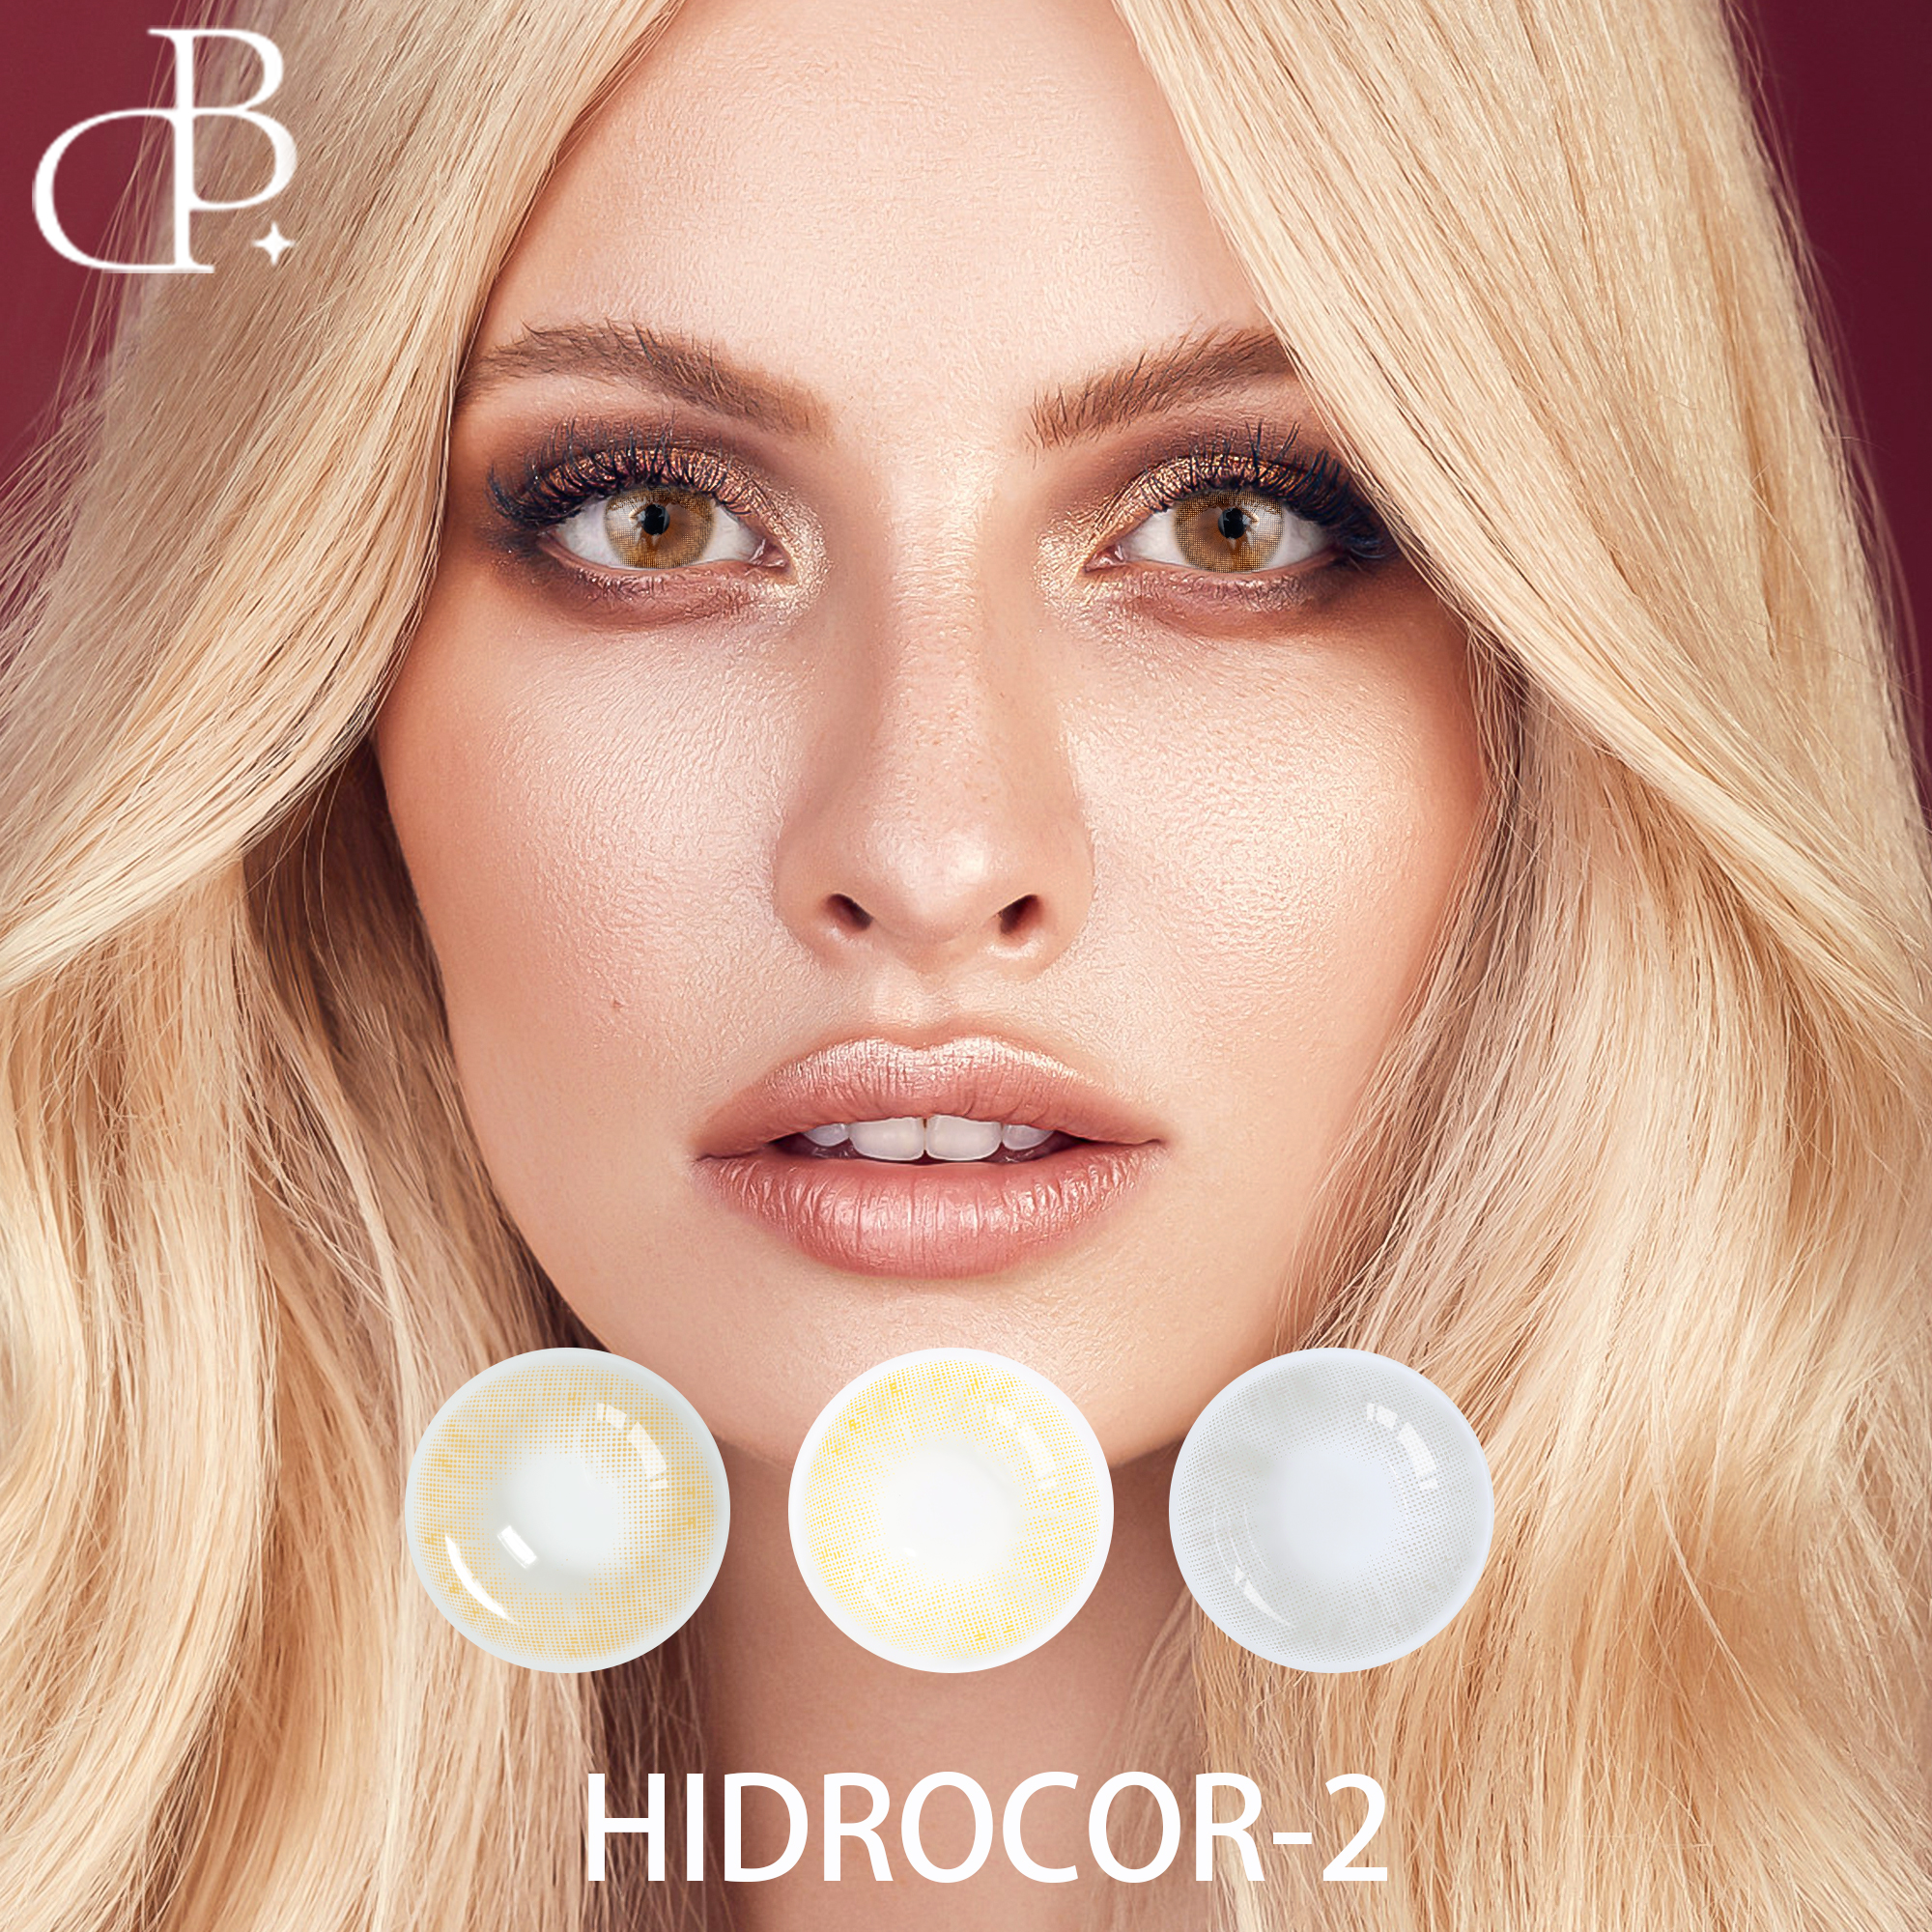 HIDROCOR leće za oči Kontaktne leće u boji dbeyes Veleprodaja Prilagodite godišnji kozmetički paket meke količine